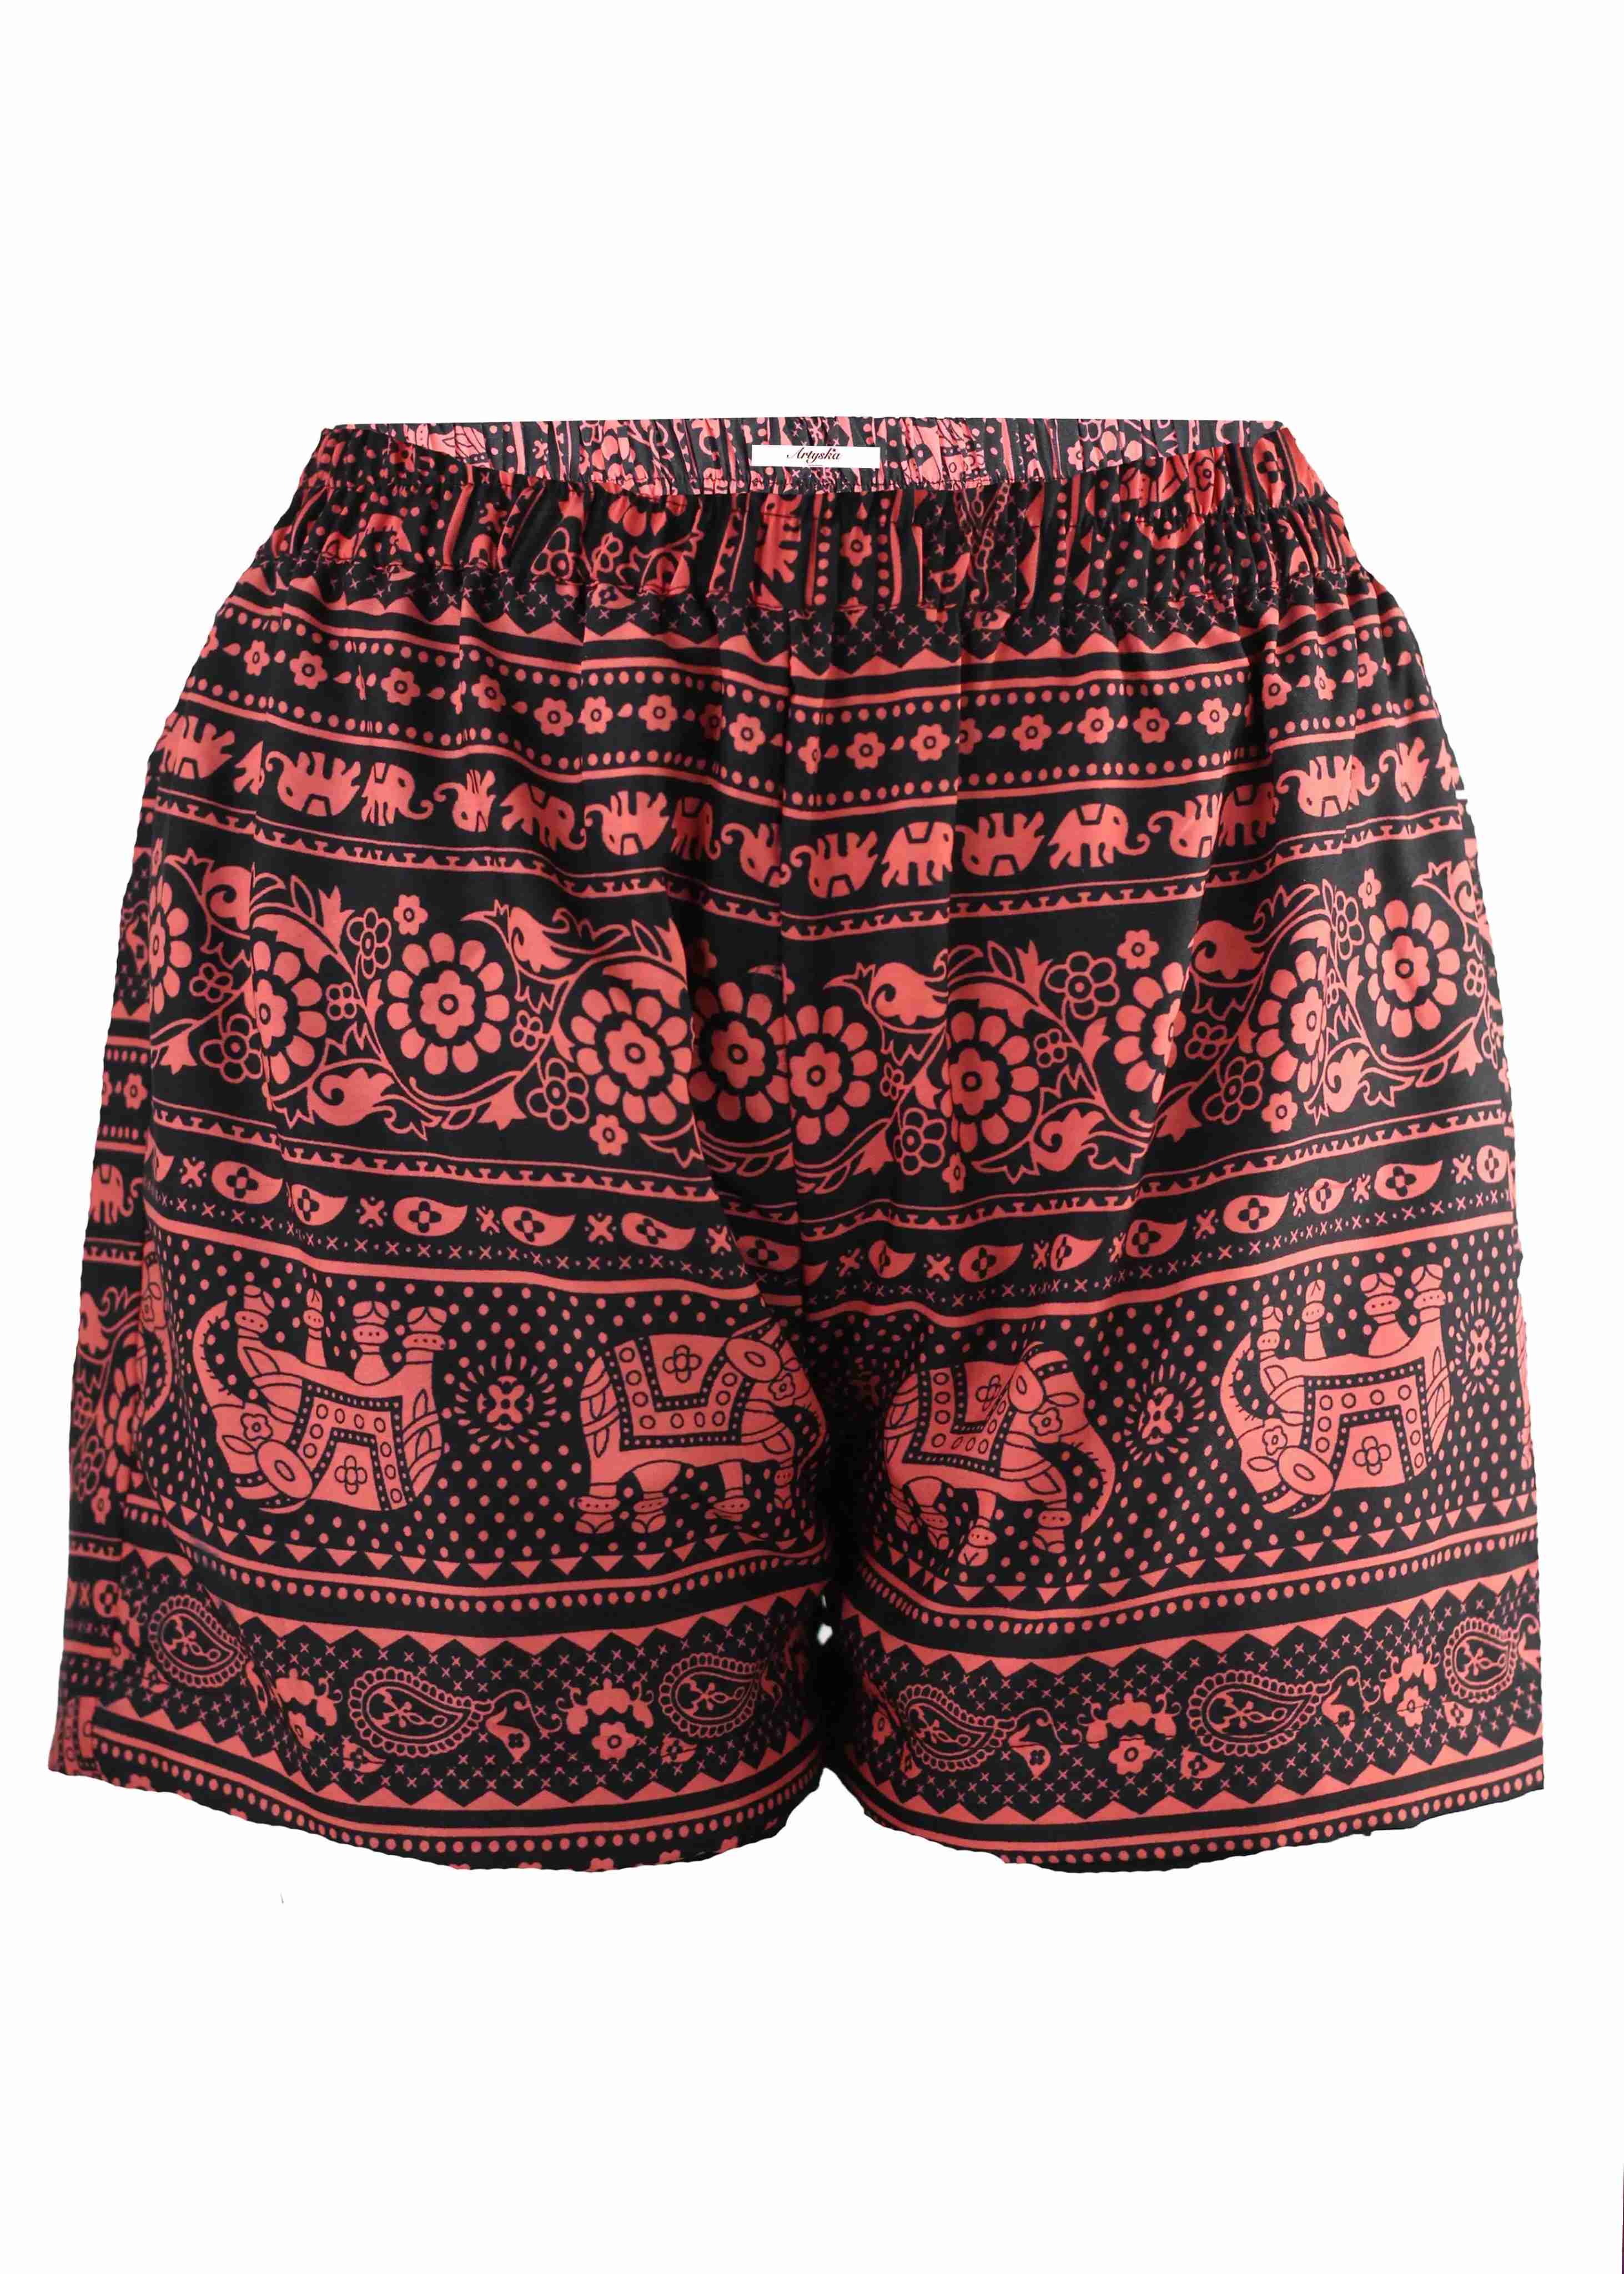 Elephant Print Maroon Shorts For Summer